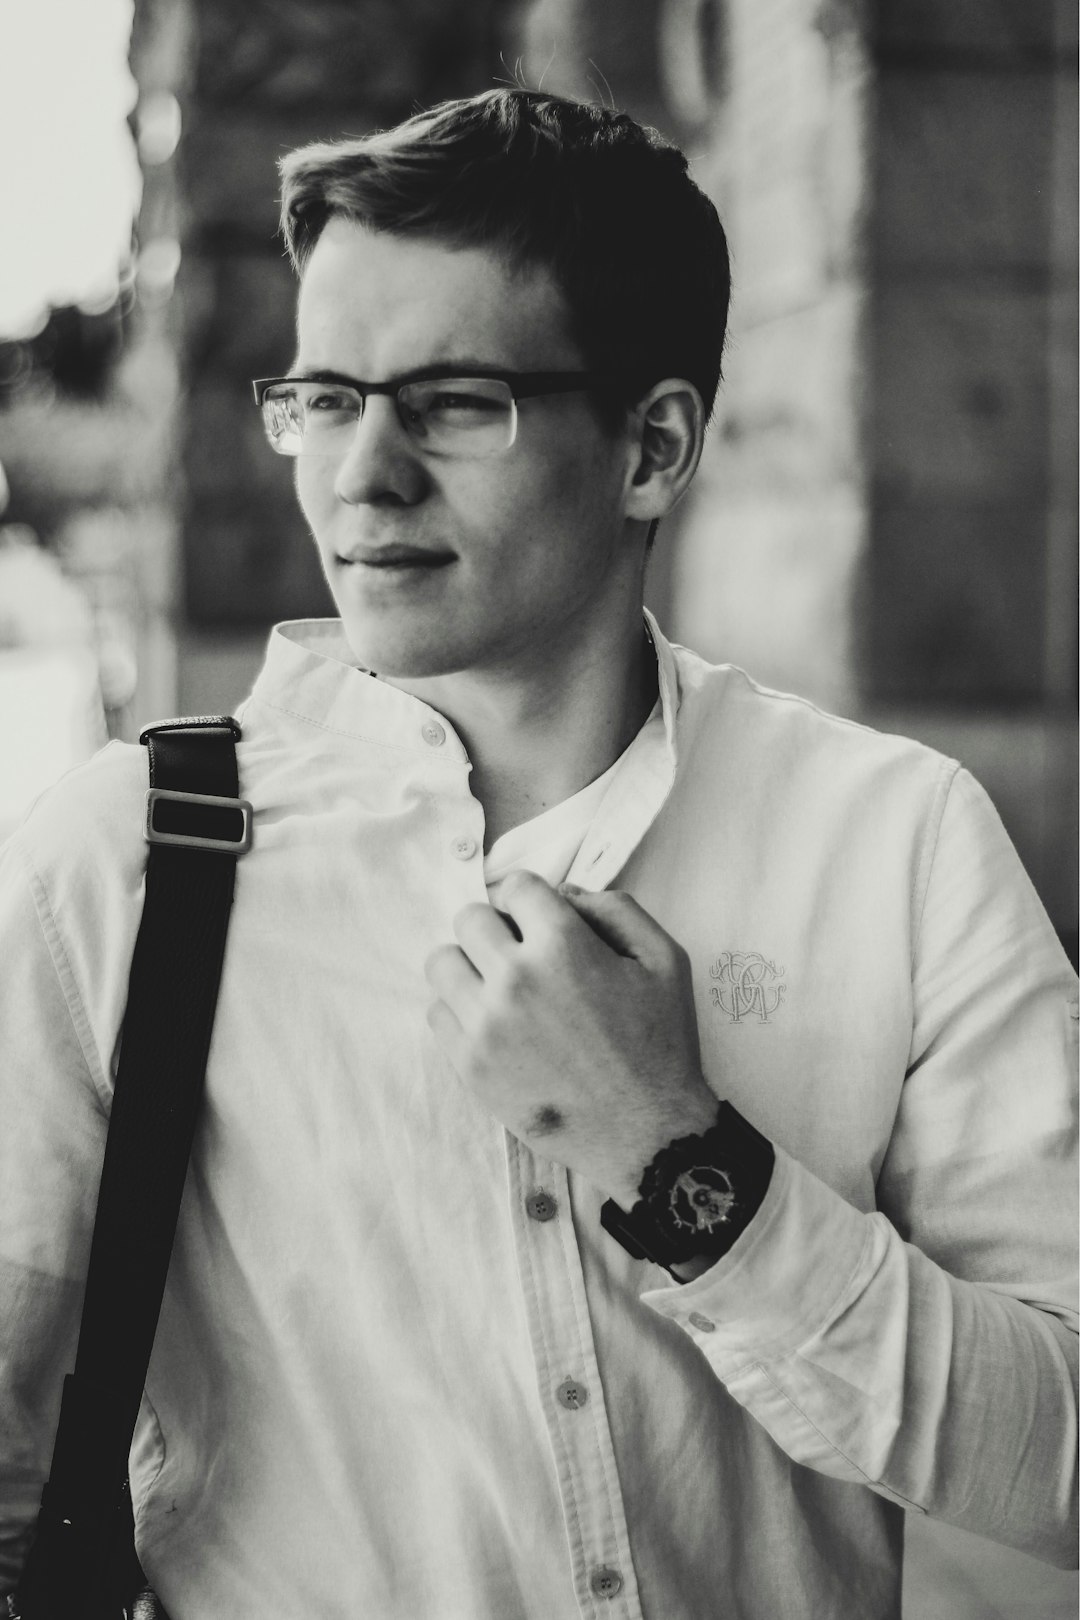 grayscale photo of man wearing white dress shirt and eyeglasses